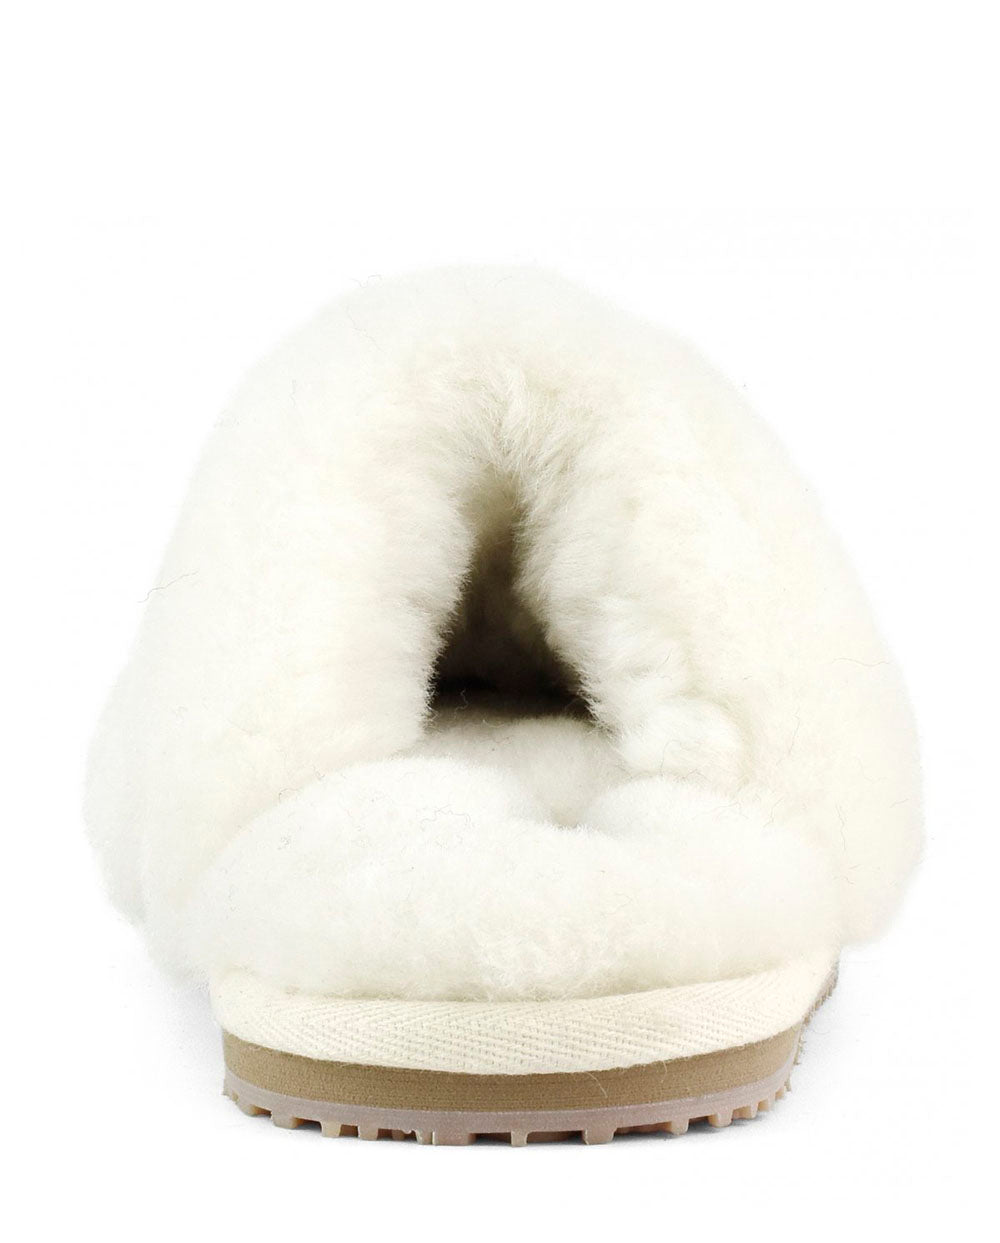 Pantufla Mou Closed toe sheepskin fur slipper vainilla